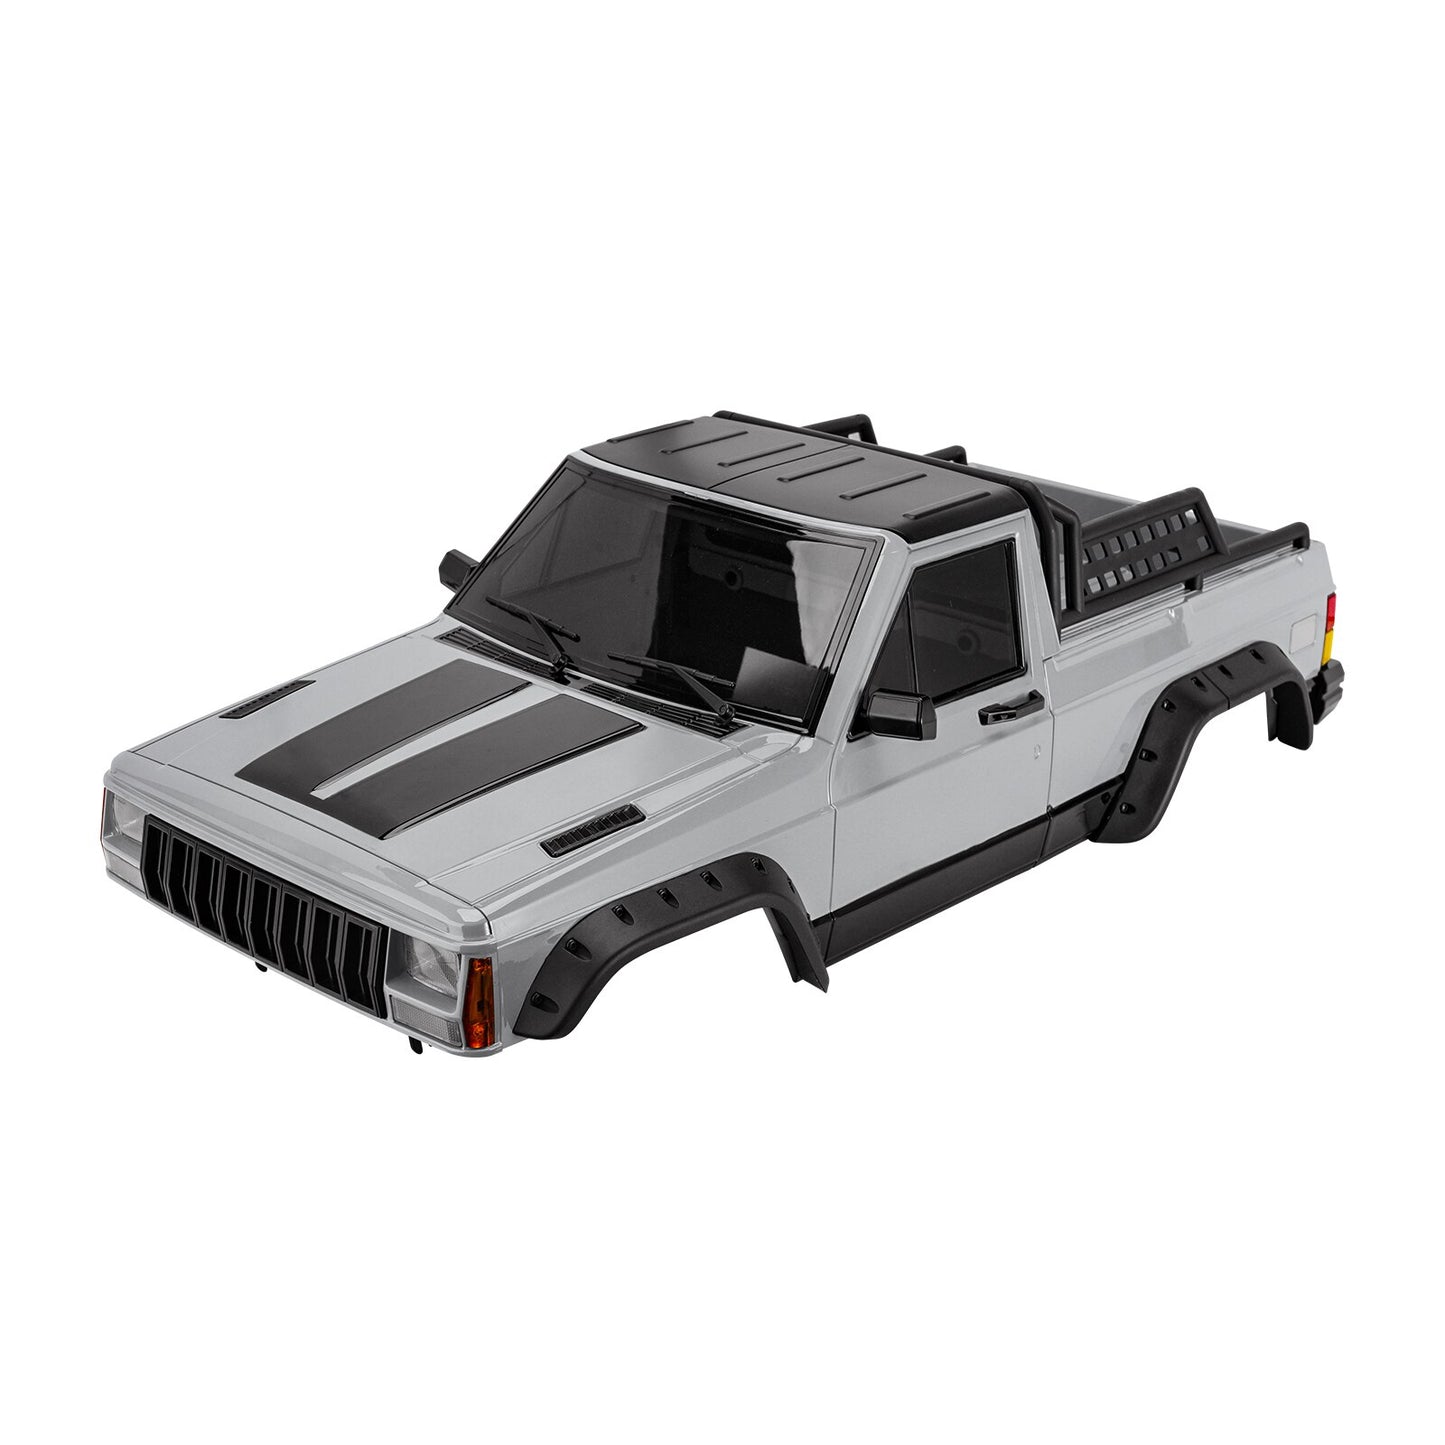 INJORA 313mm Interasse Pickup Truck Cherokee Kit carrozzeria per 1/10 RC Crawler Car Axial SCX10 e SCX10 II 90046